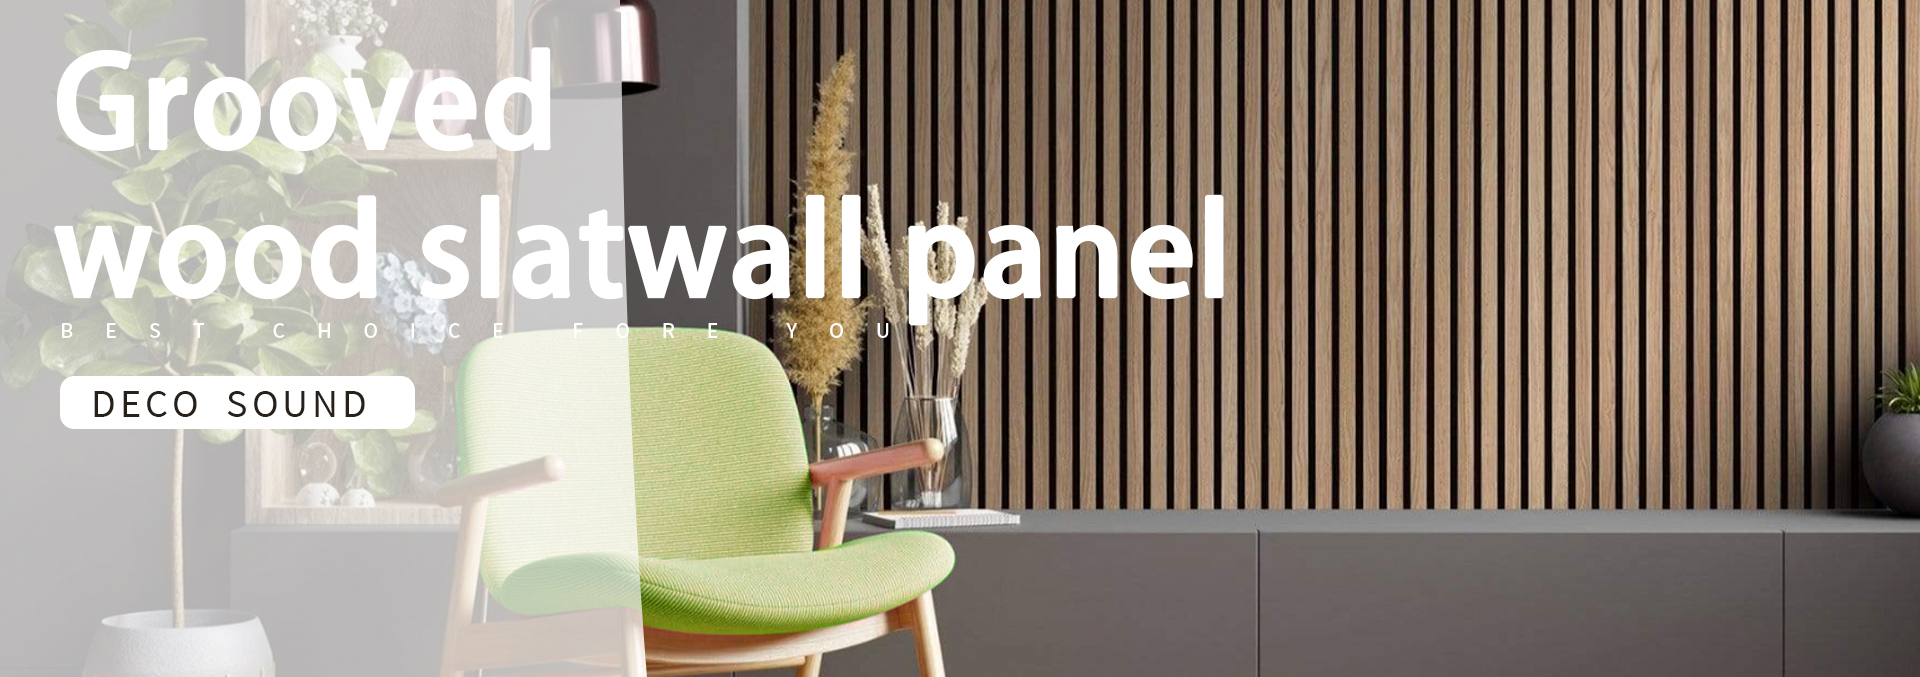 Grooved wood slatwall panels